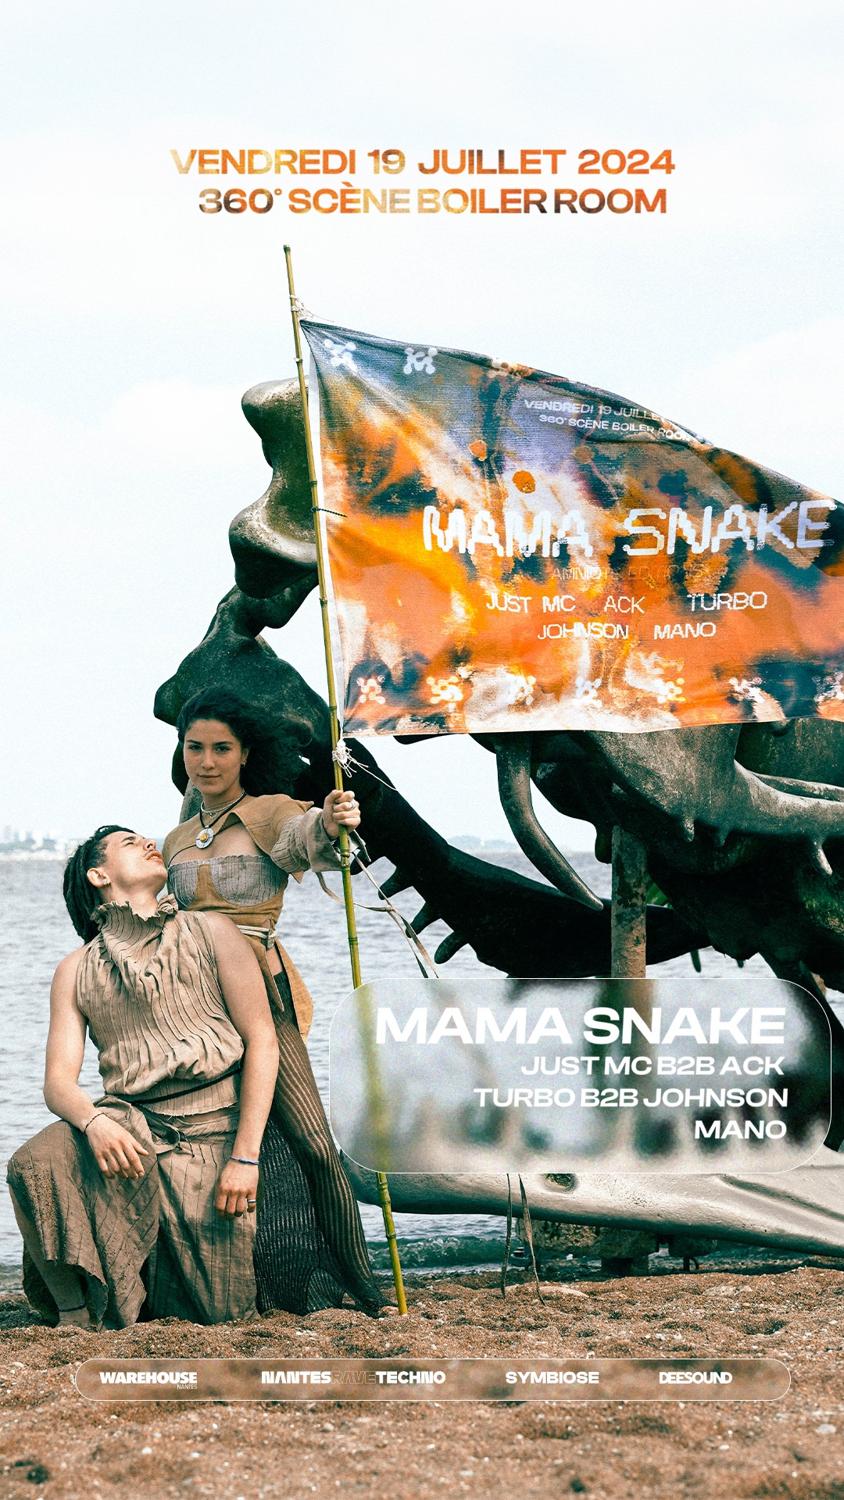 Nantes Rave Techno X Symbiose & Deesound W/ Mama Snake